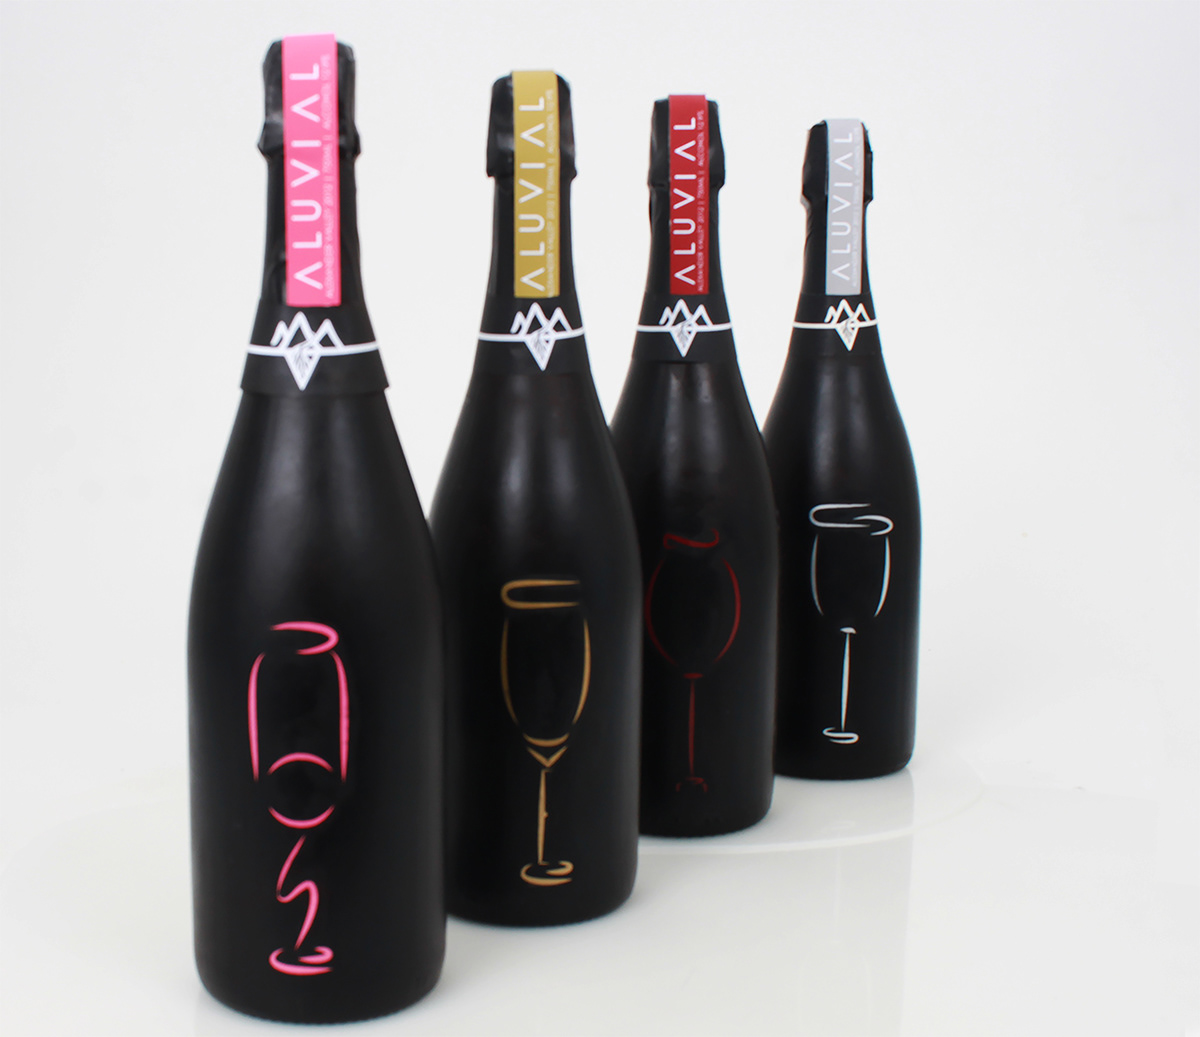 #wine #Champagne #package  #bottles   #Identity #Logo #emblem #dieline #DIY #Craft